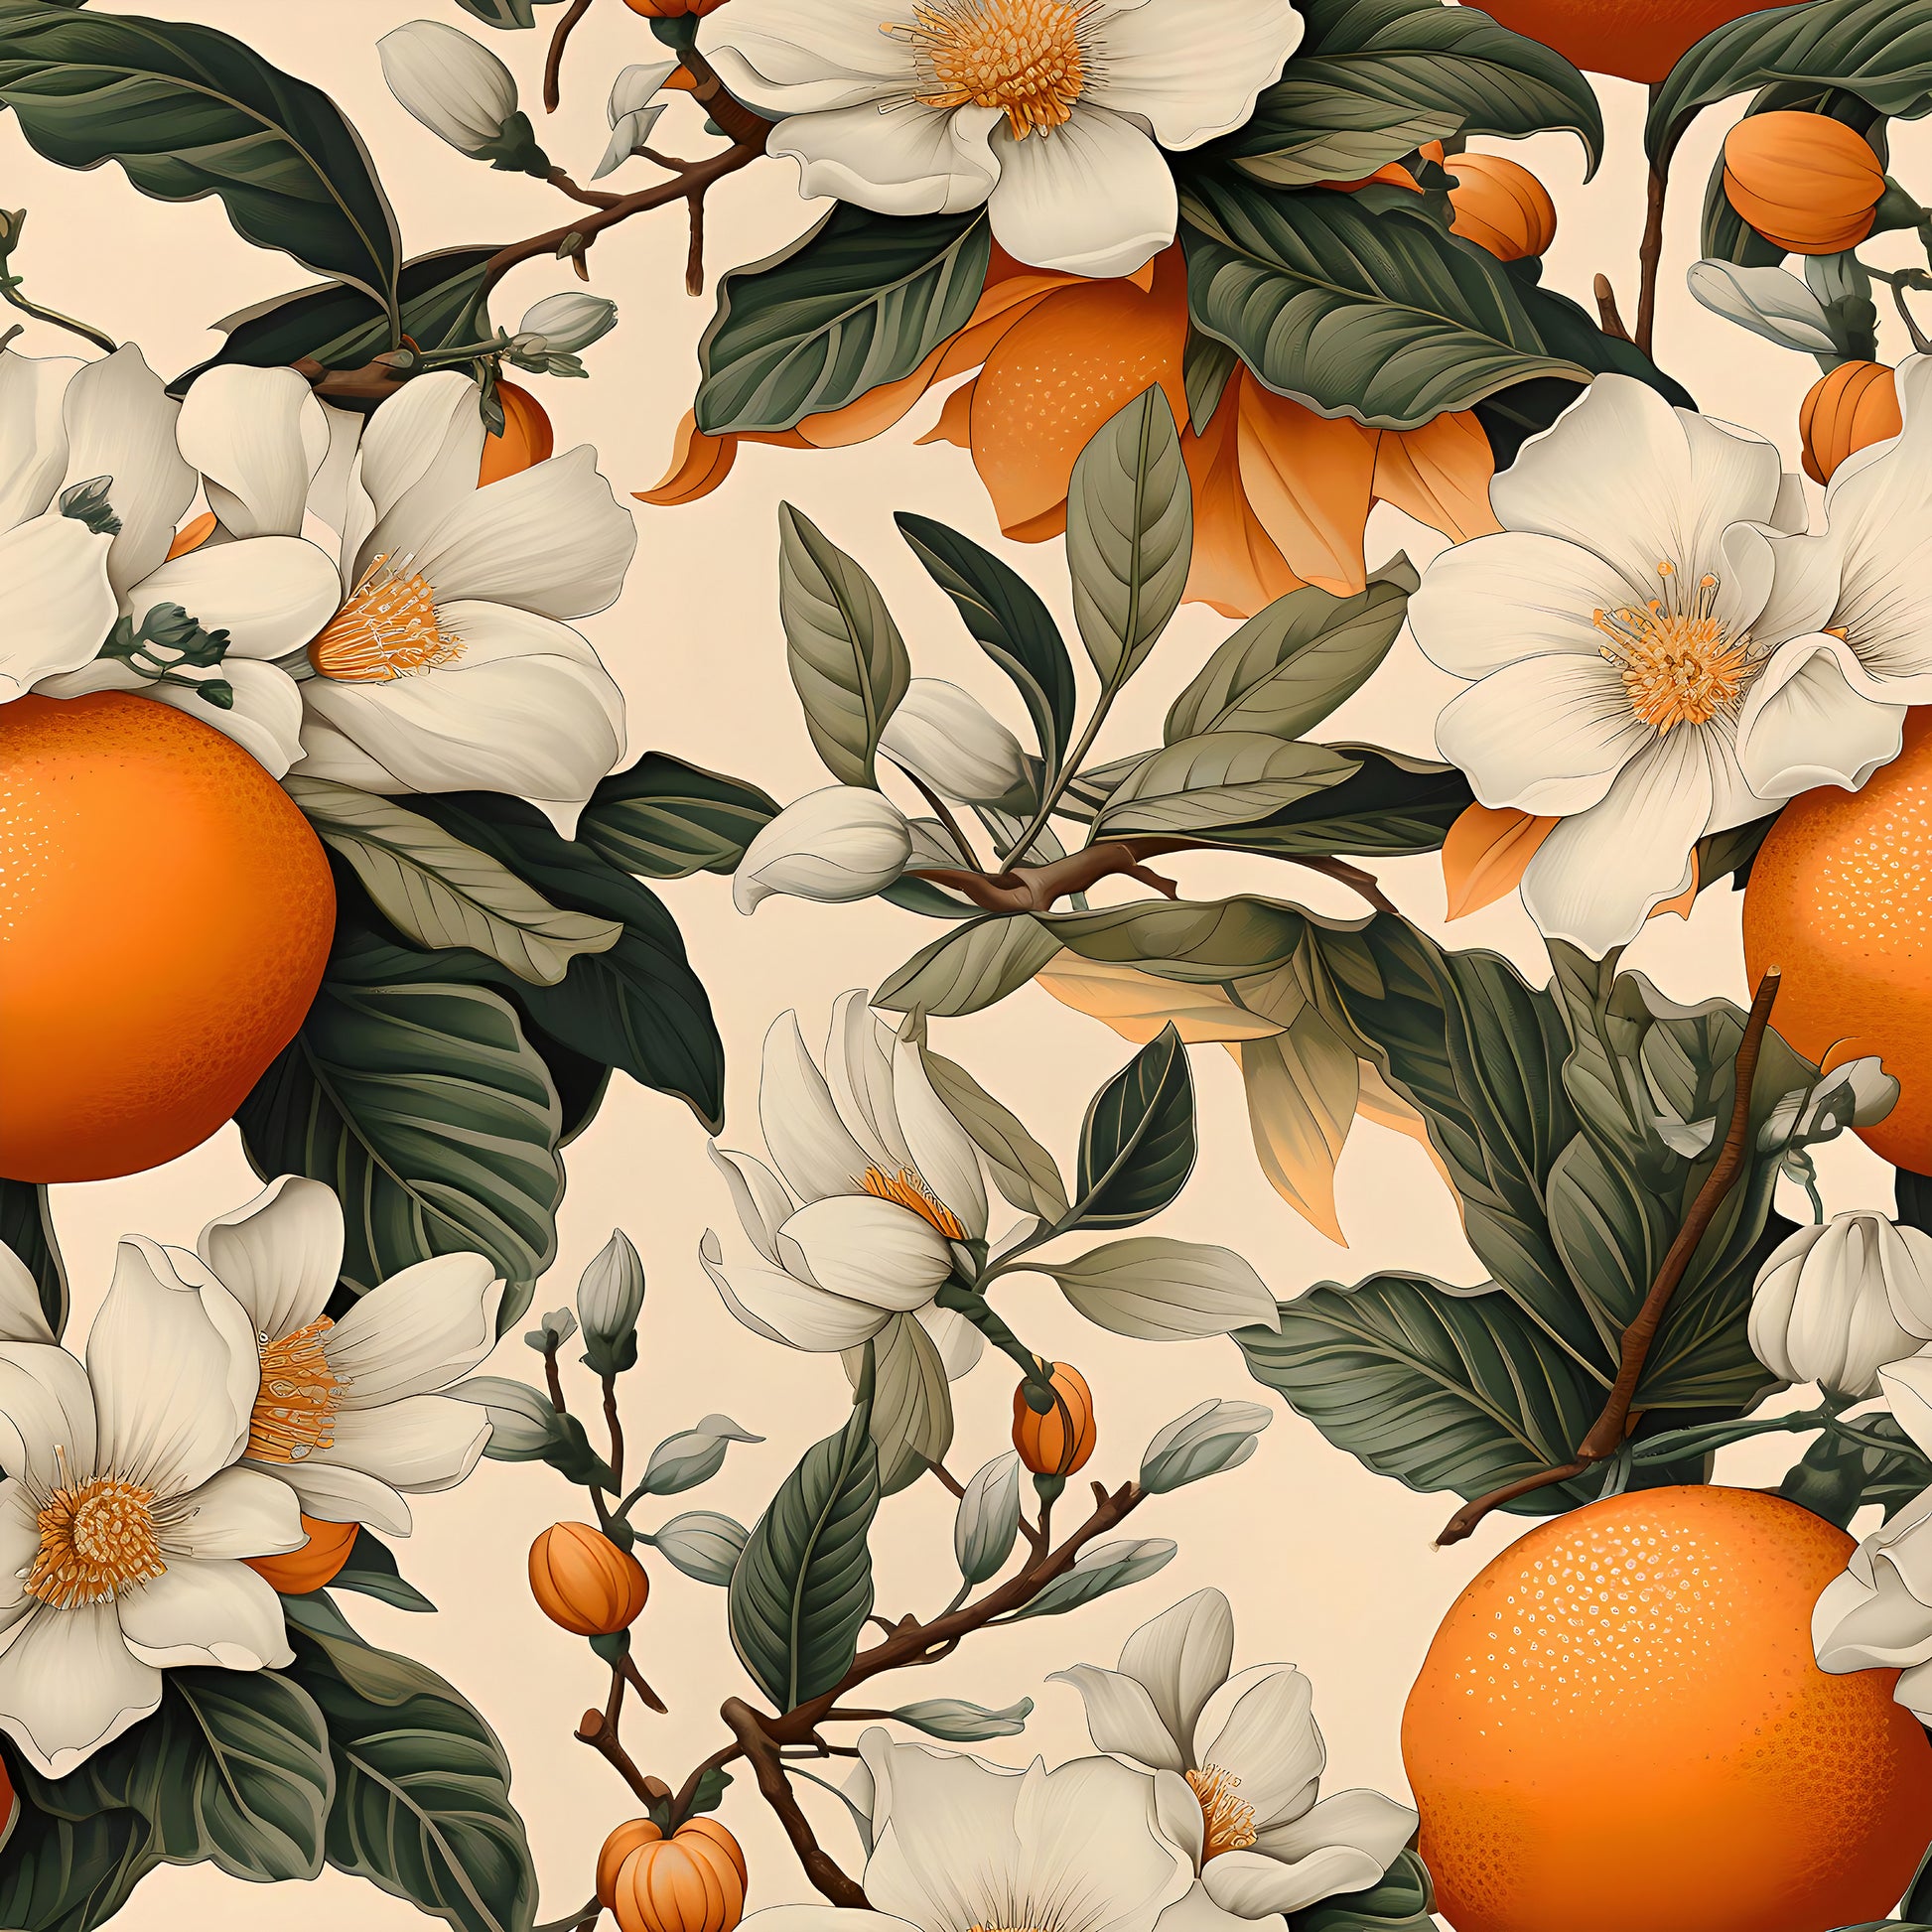 Handcrafted Orange Fruit Garden Wall Design